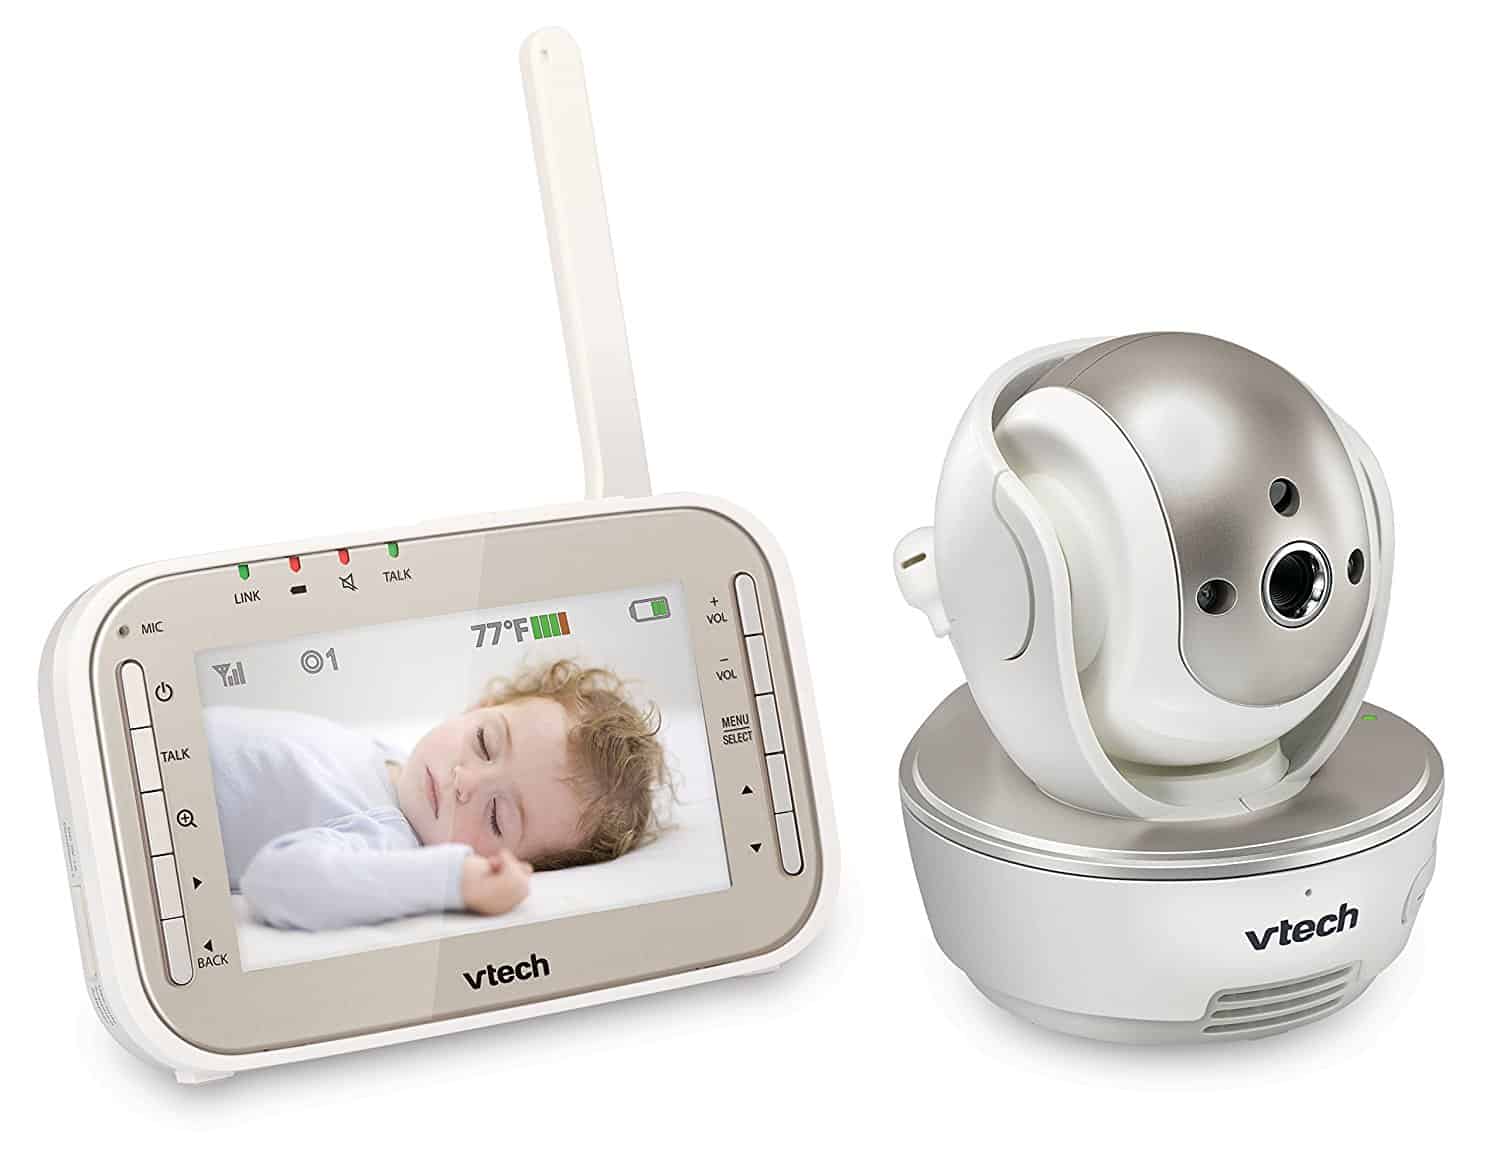 vtech baby monitor price